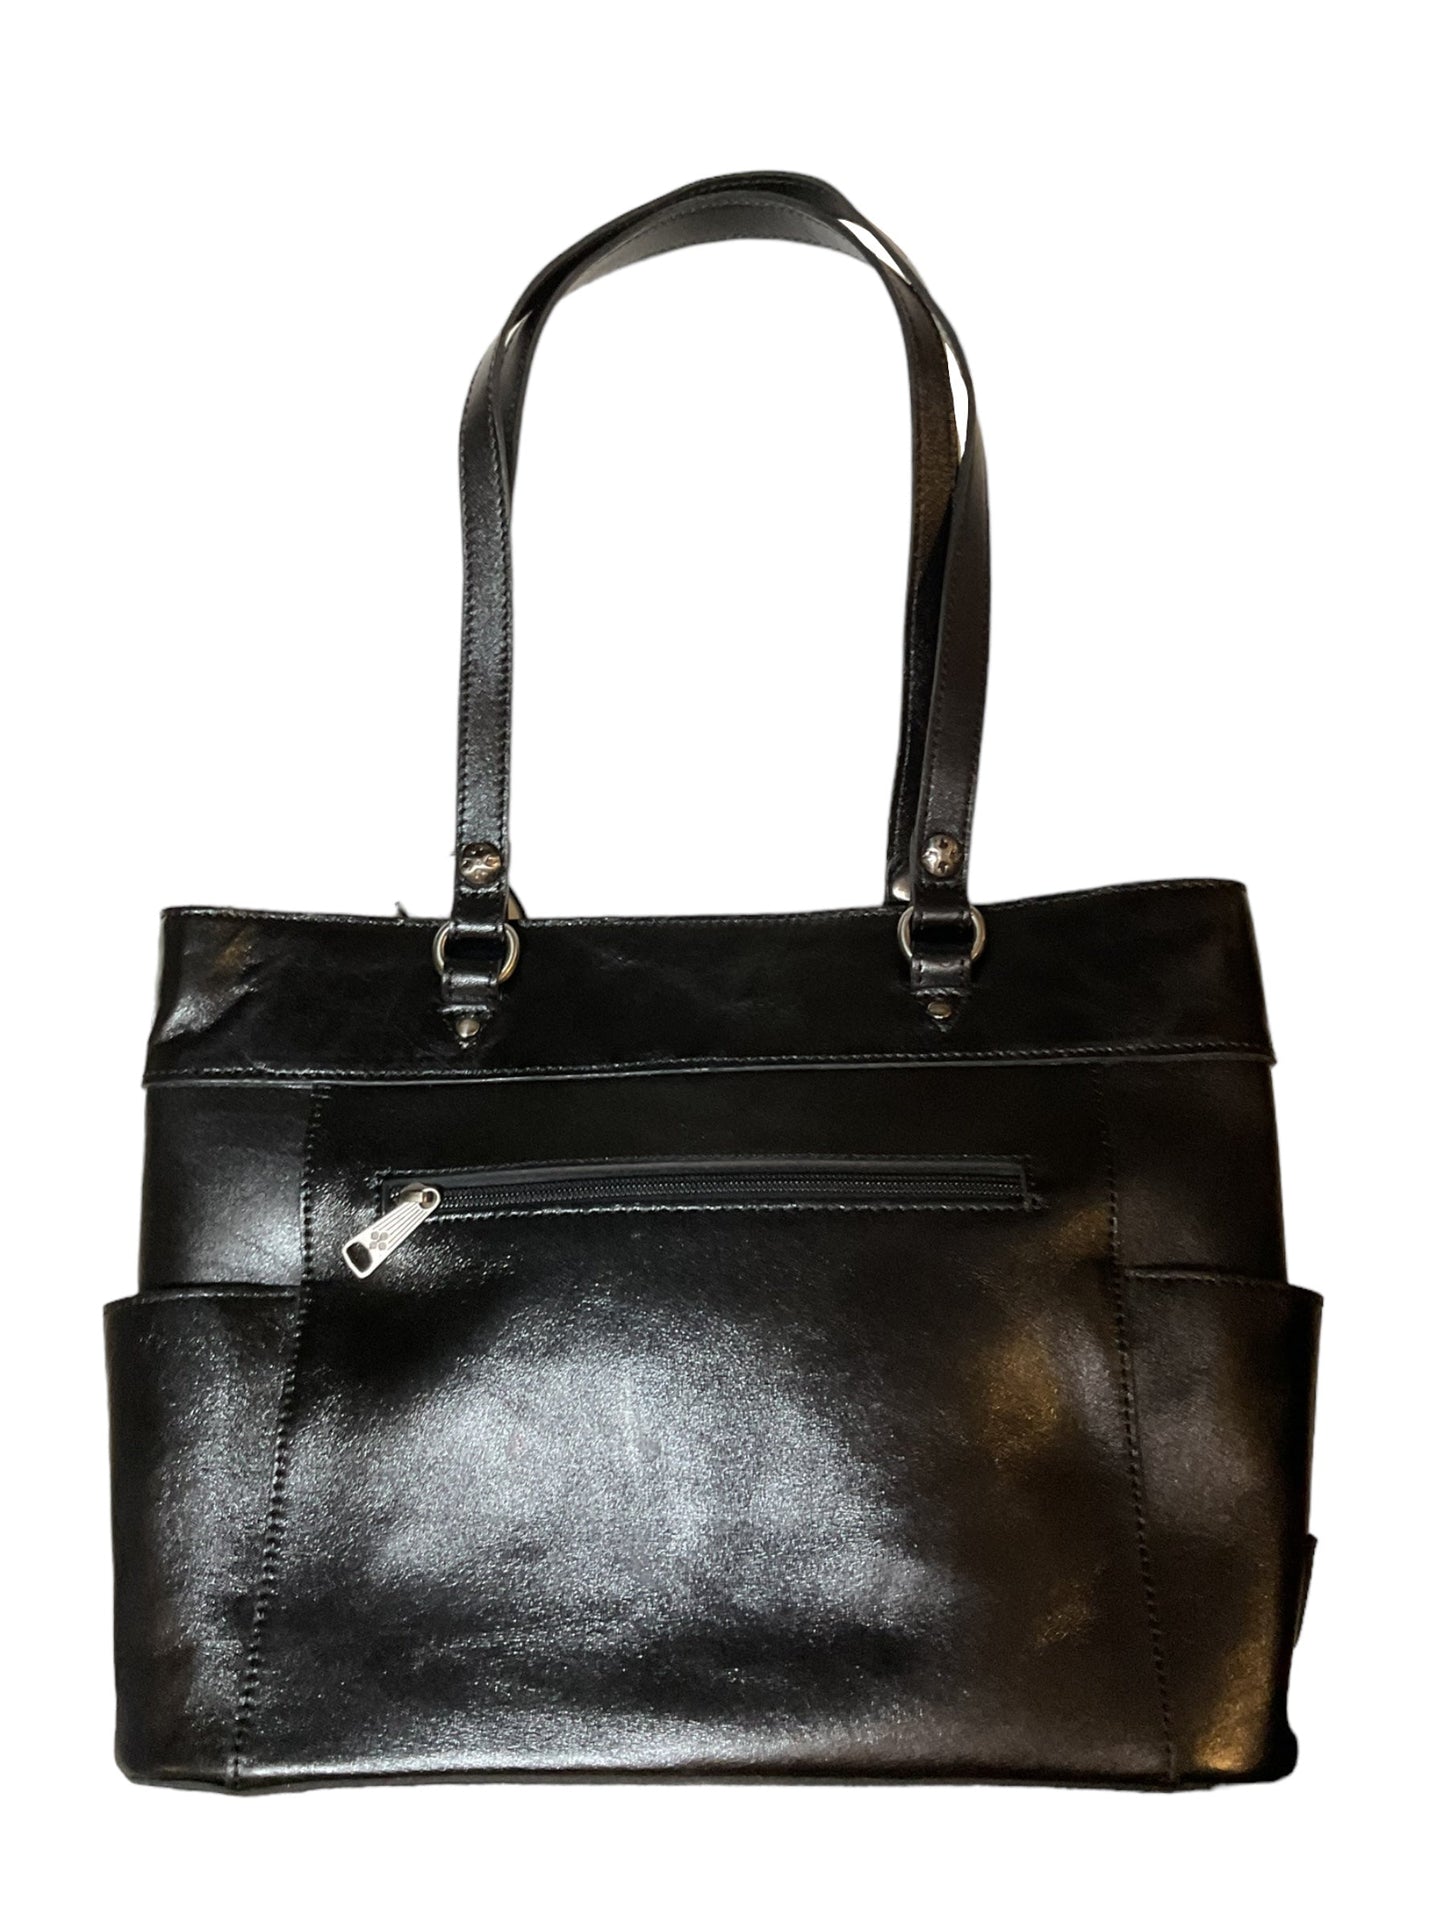 Handbag Designer Patricia Nash, Size Large